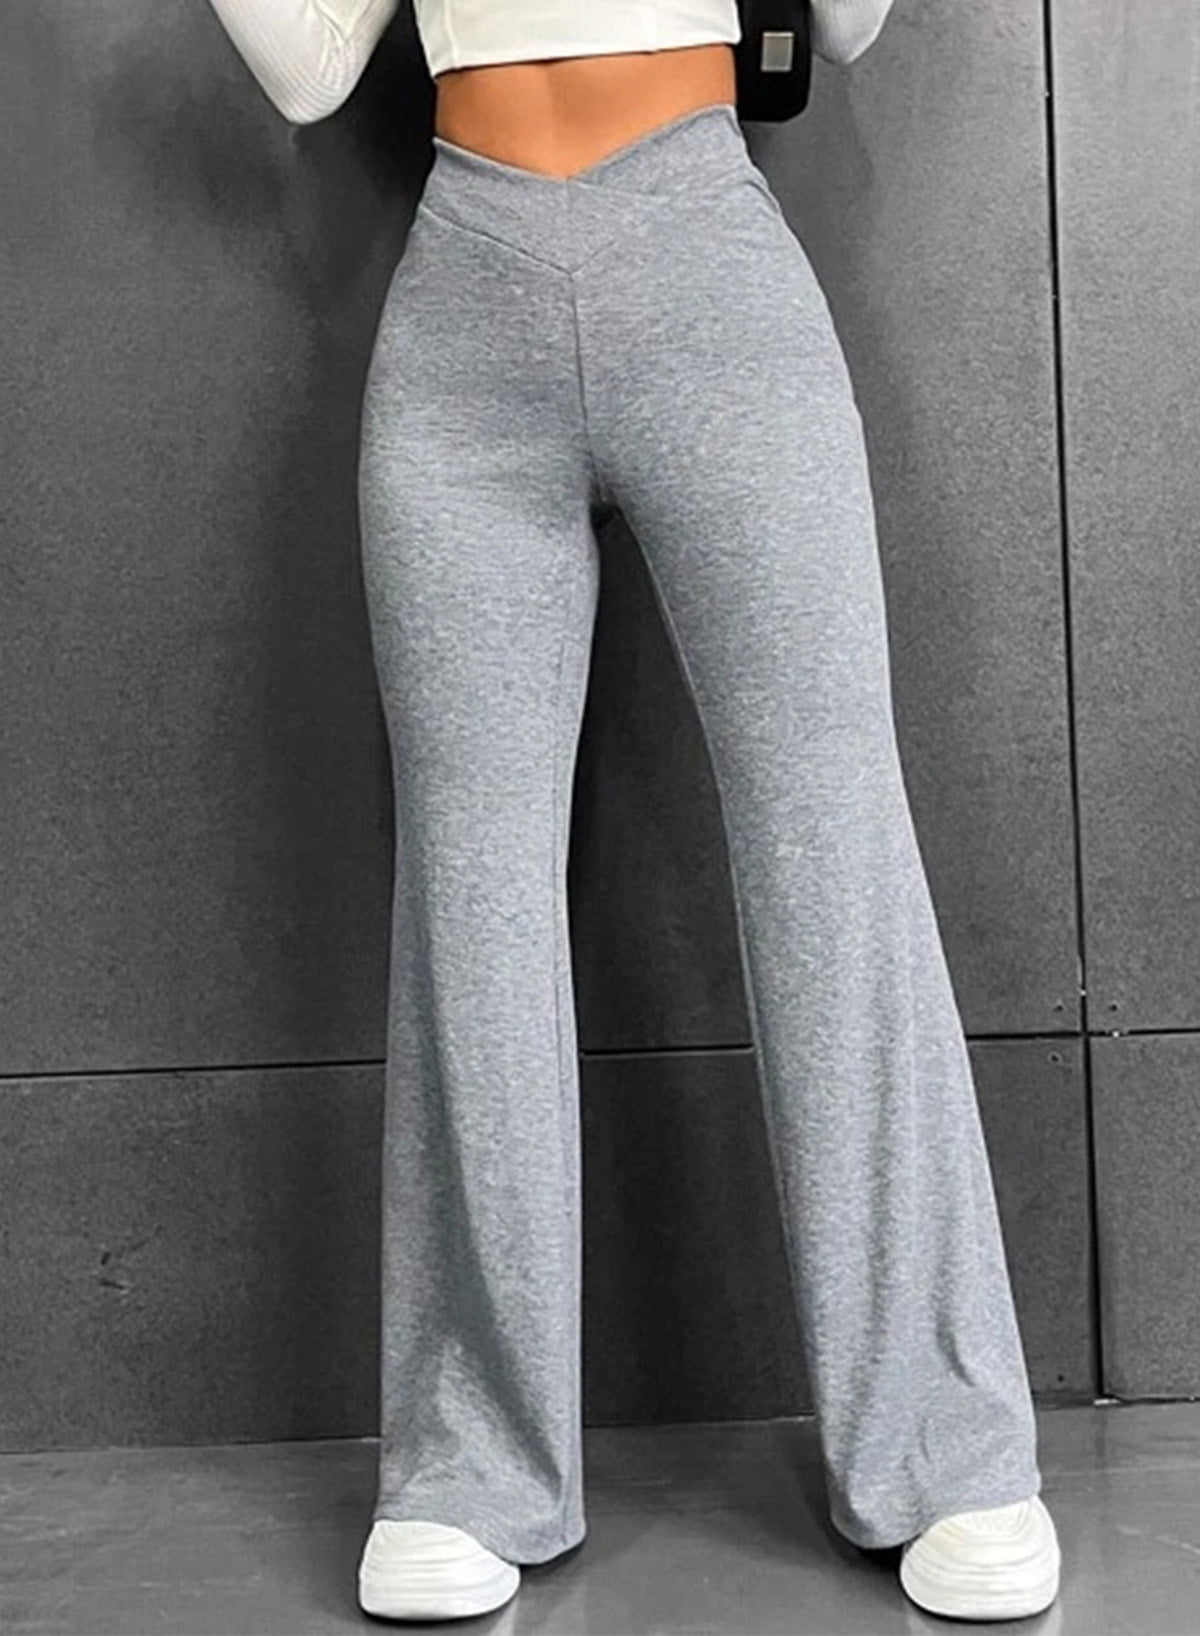 ZKESS Yoga Pants Plus Size for Women Flare Buttery Soft High Waist Comfy  Bell Bottom Pants Bootcut Leggings 4X Purple